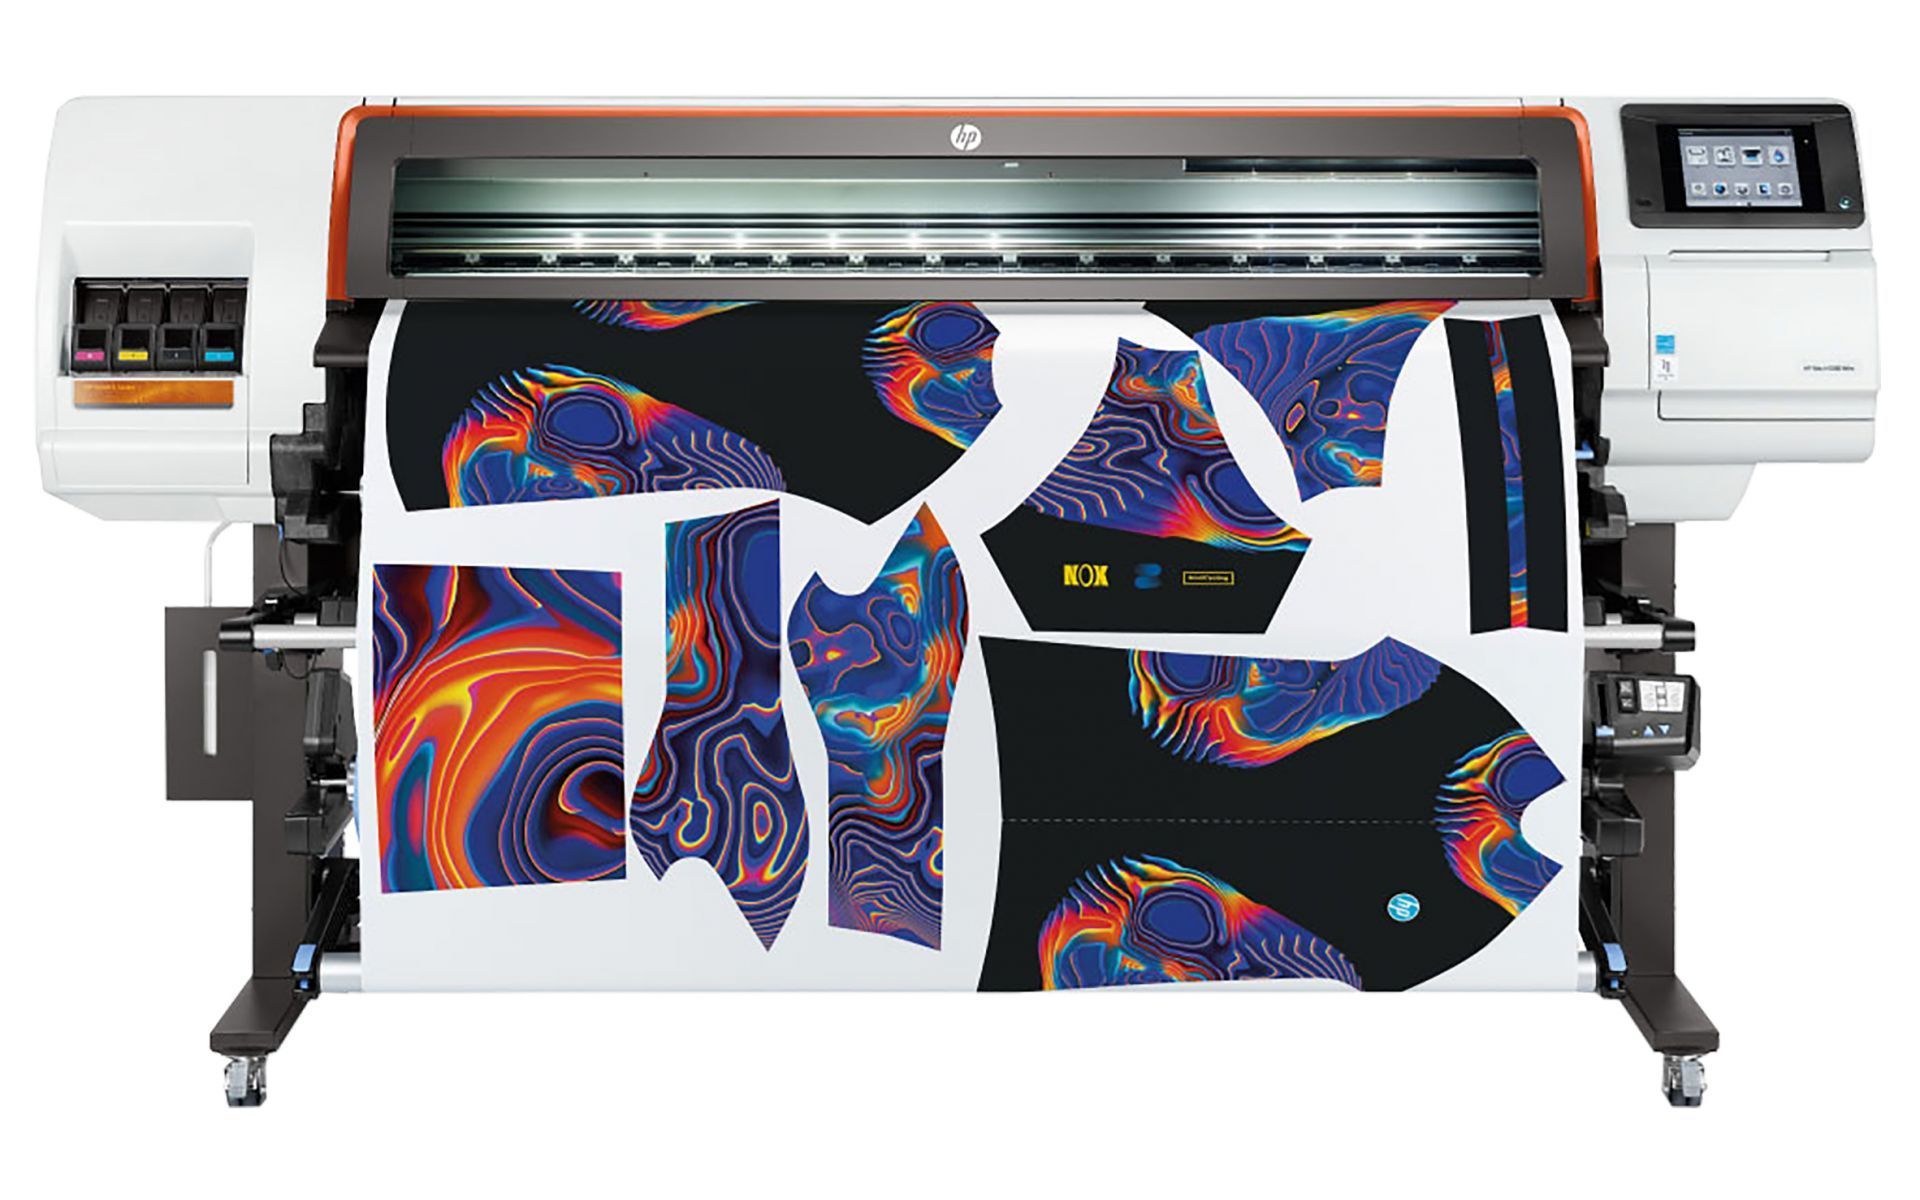 Imprimante Textile Azon Tex Pro : achat - vente